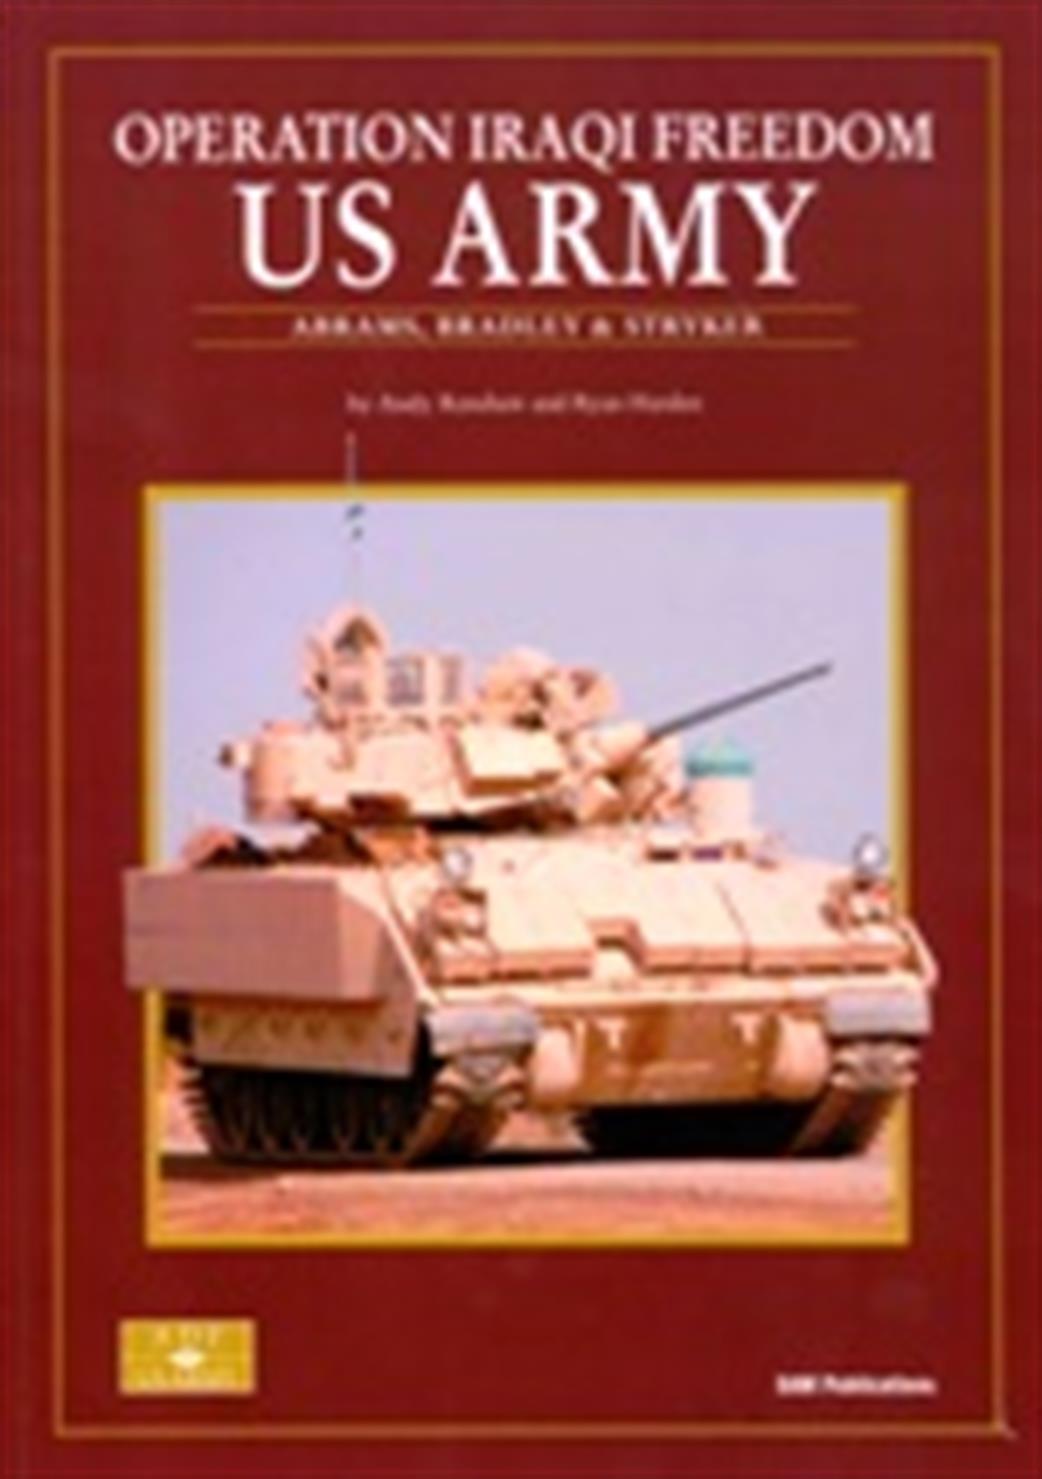 Sam Publications  9781906959159 Operation Iraqi Freedom US Army by Andy Renshaw & Ryan Harden